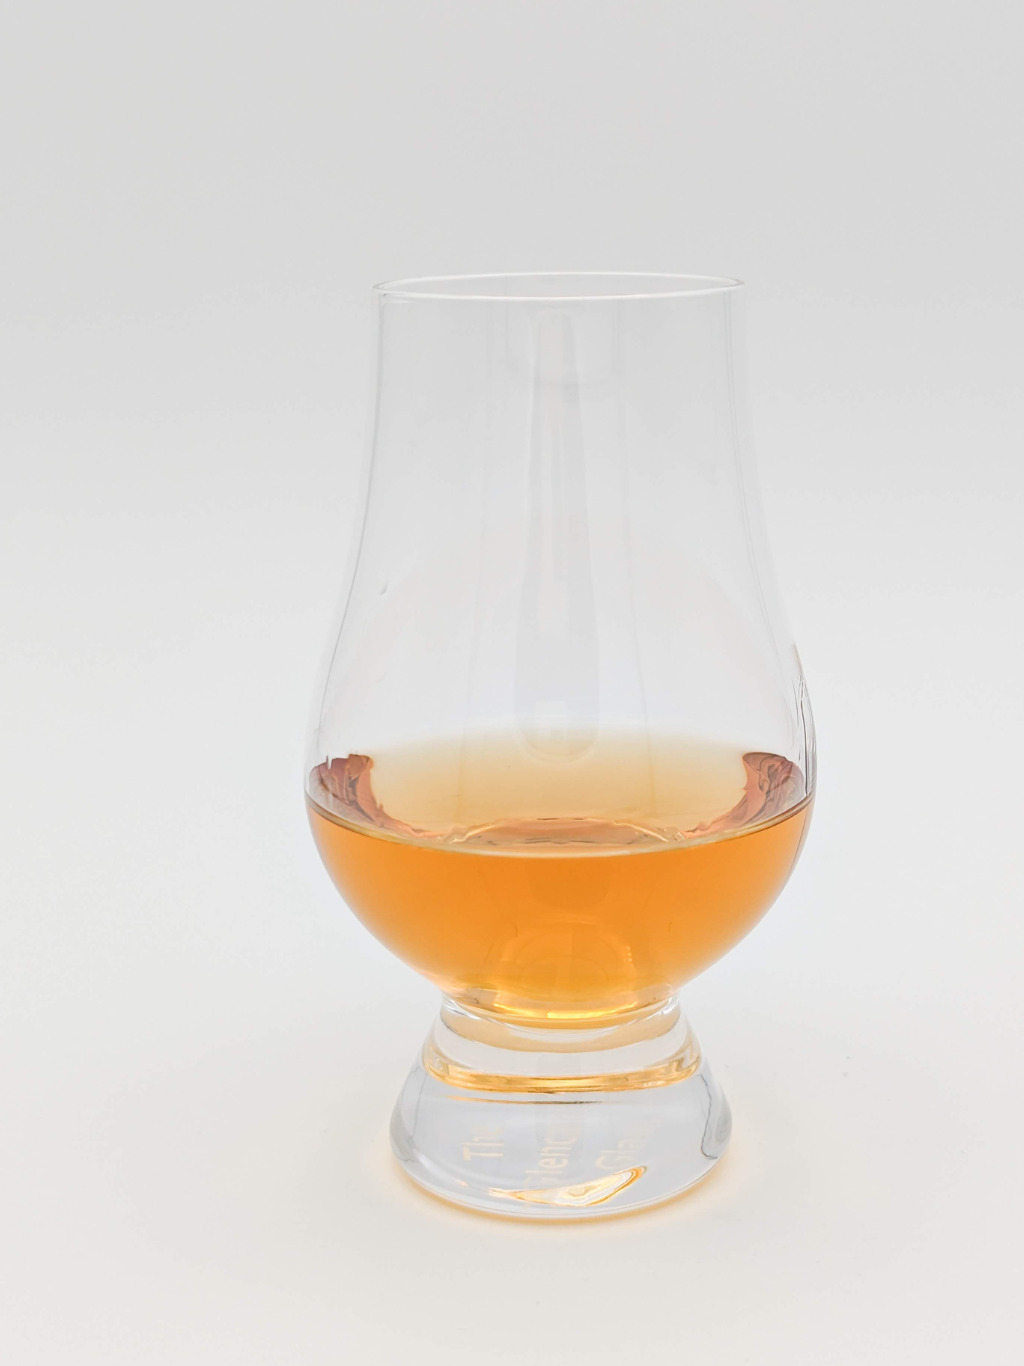 Honey colored liquid in a Glencairn glass